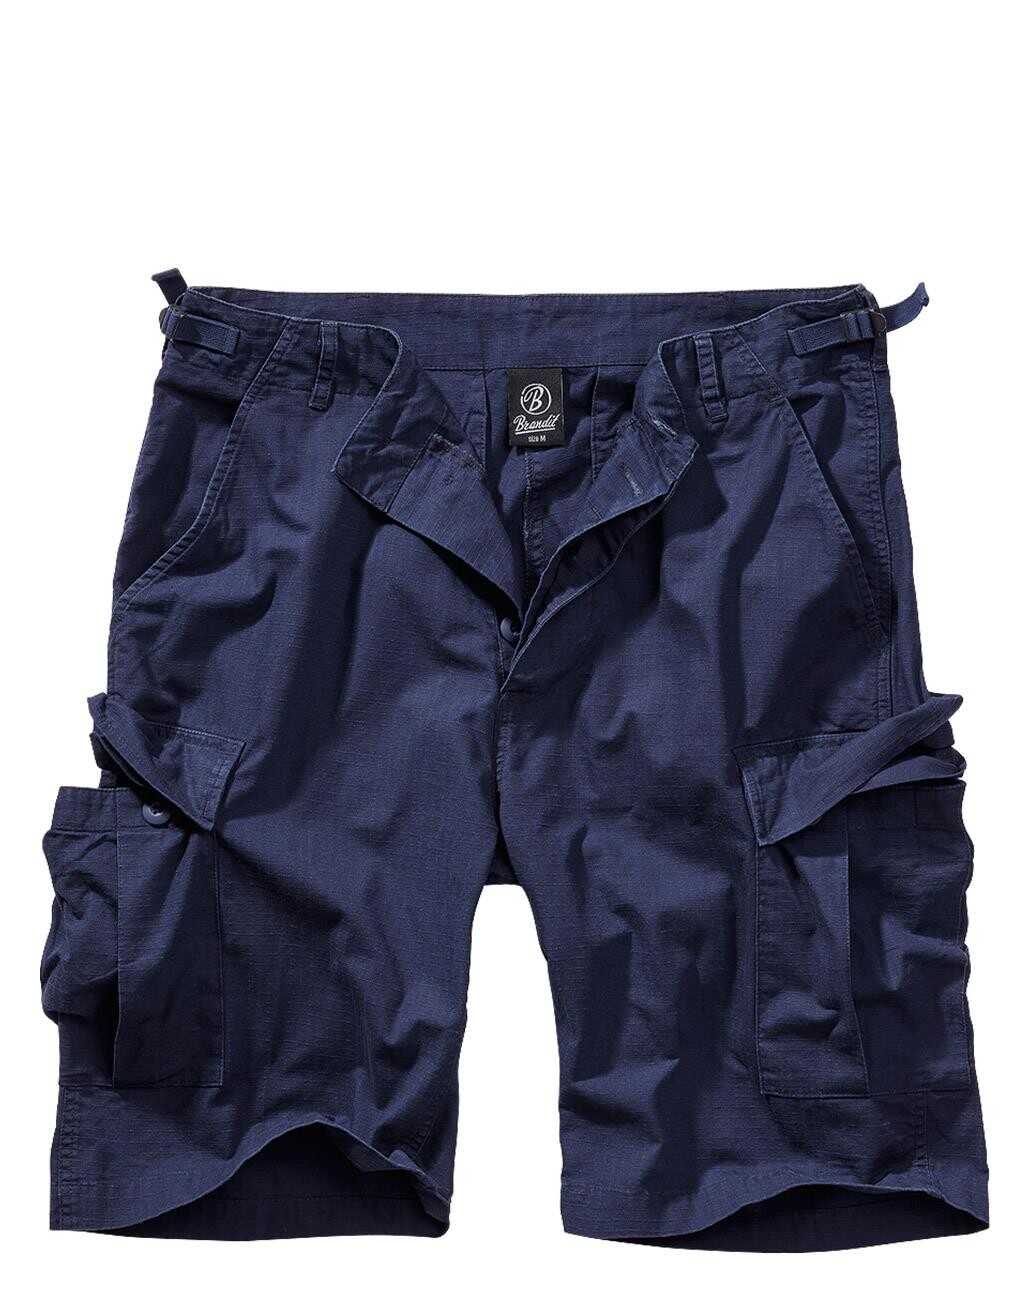 Brandit BDU Ripstop Shorts (Navy, M)